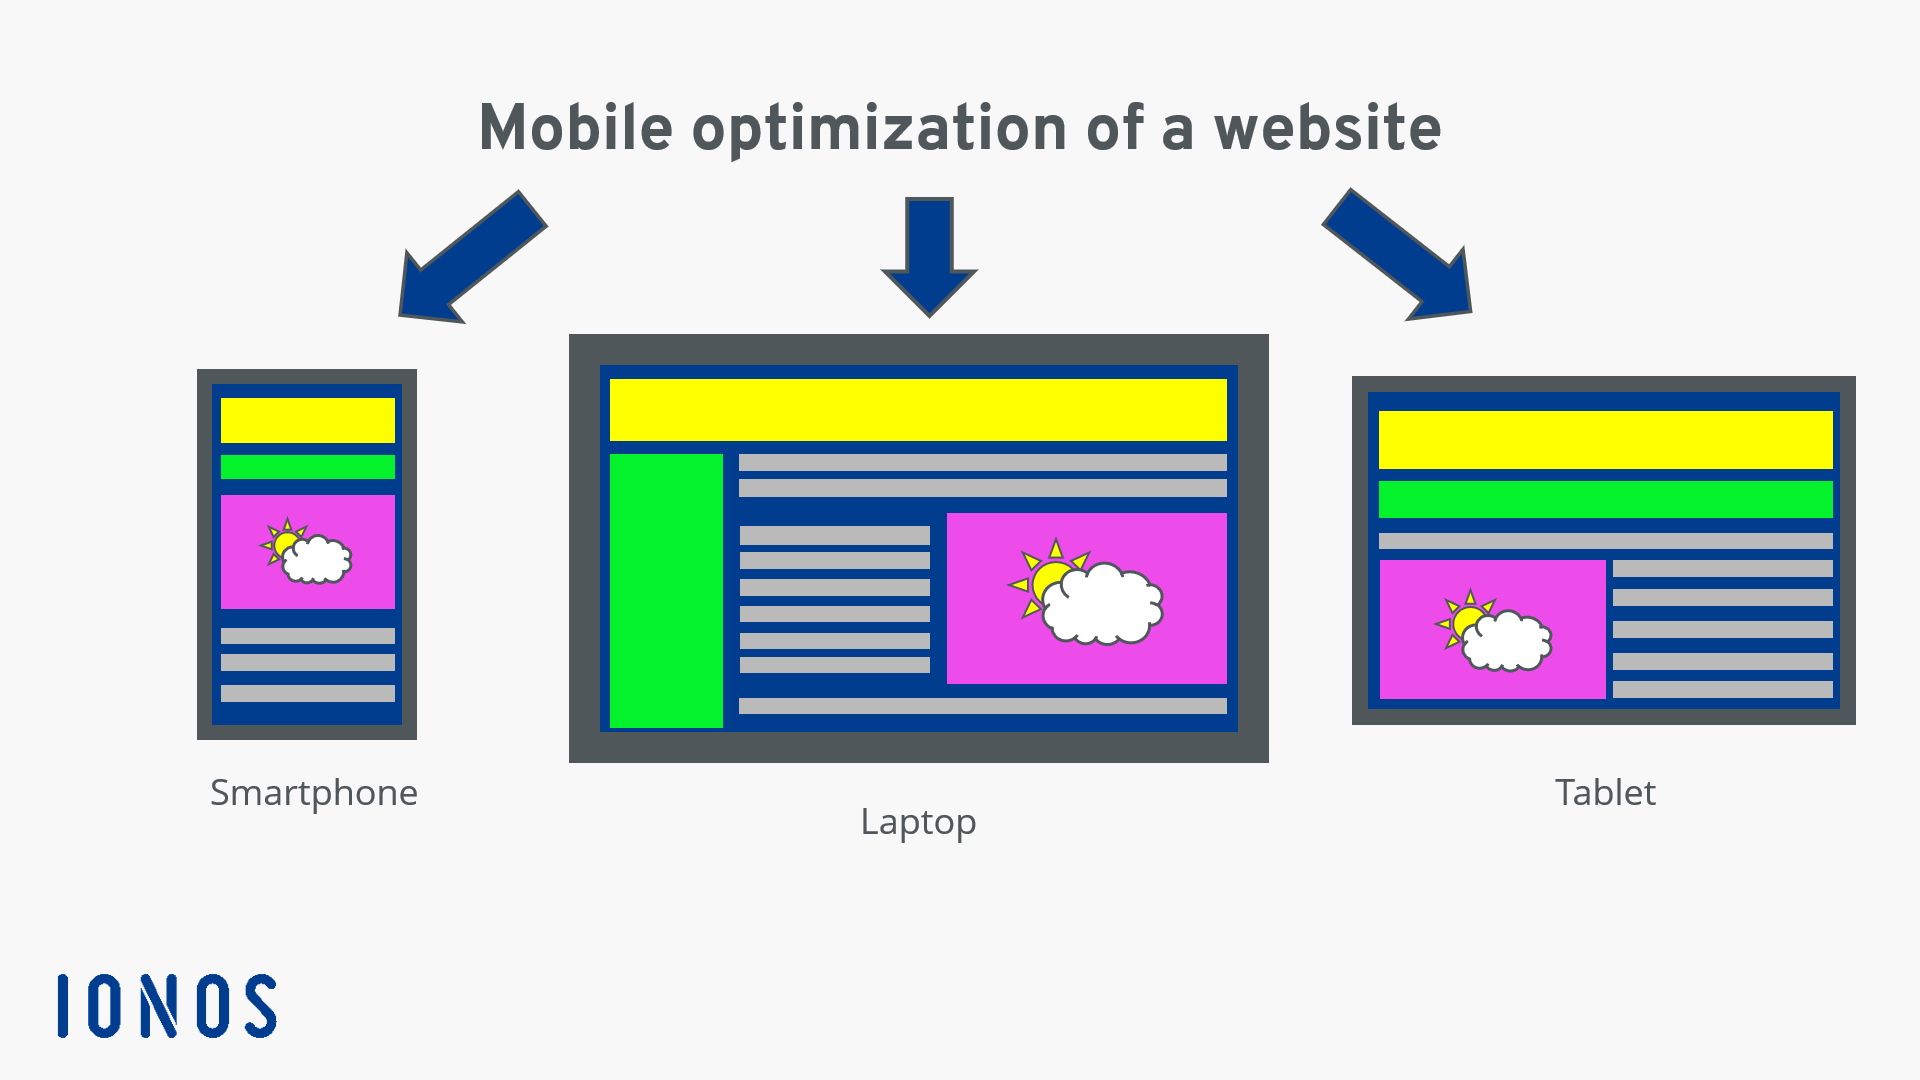 Graphic: Mobile optimization of websites